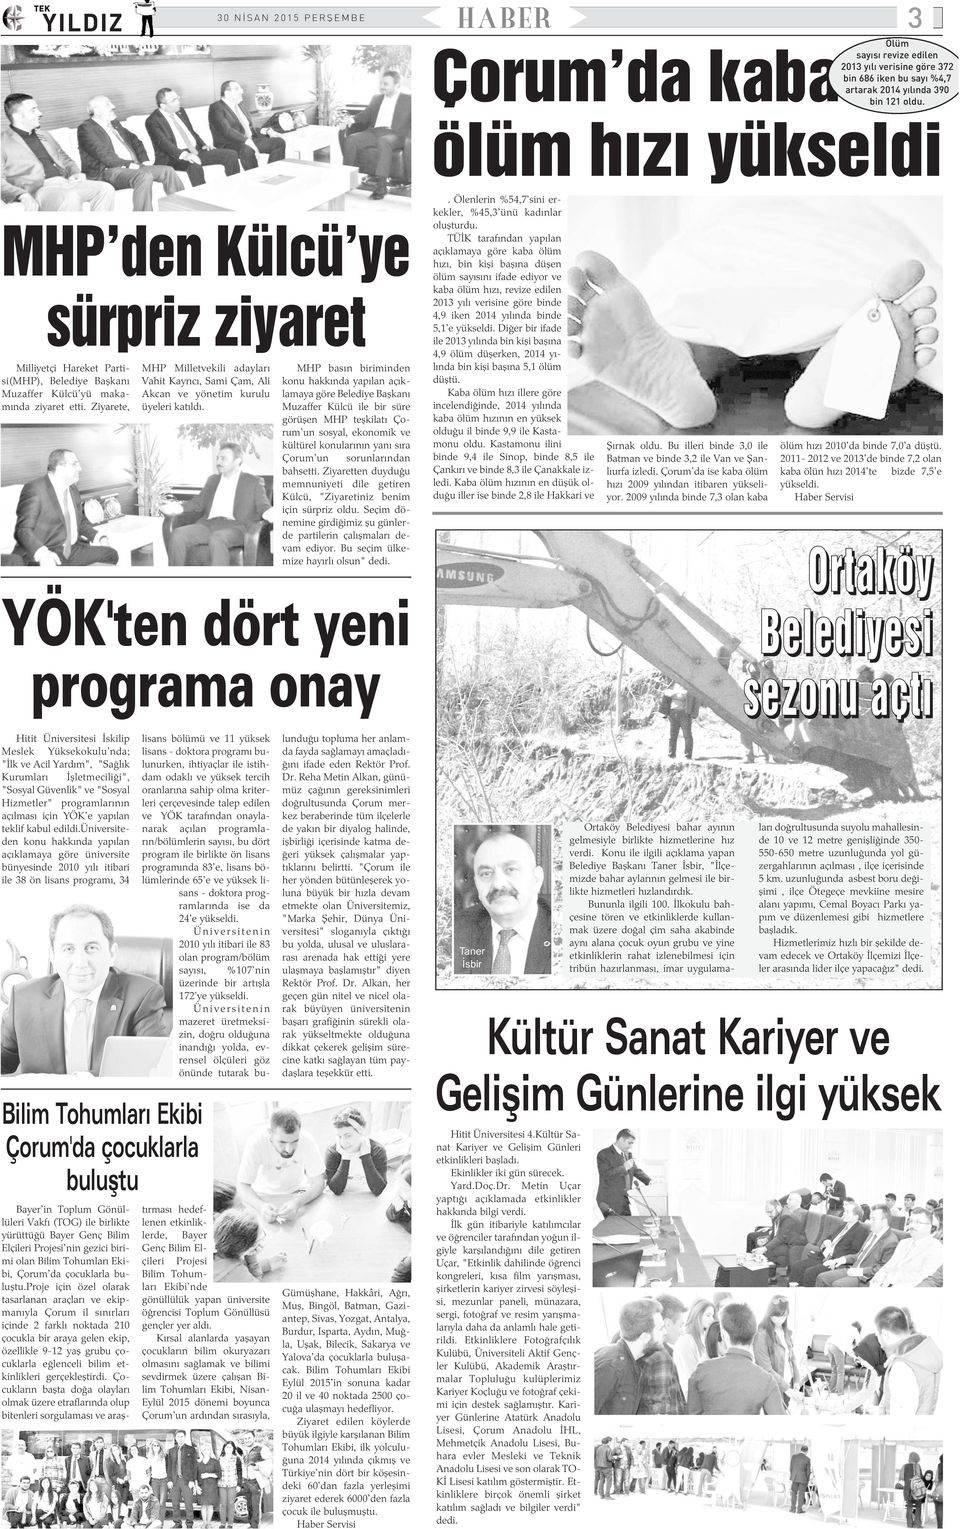 Ziyarete, MHP Milletvekili adaylarý Vahit Kayrýcý, Sami Çam, Ali Akcan ve yönetim kurulu üyeleri katýldý.